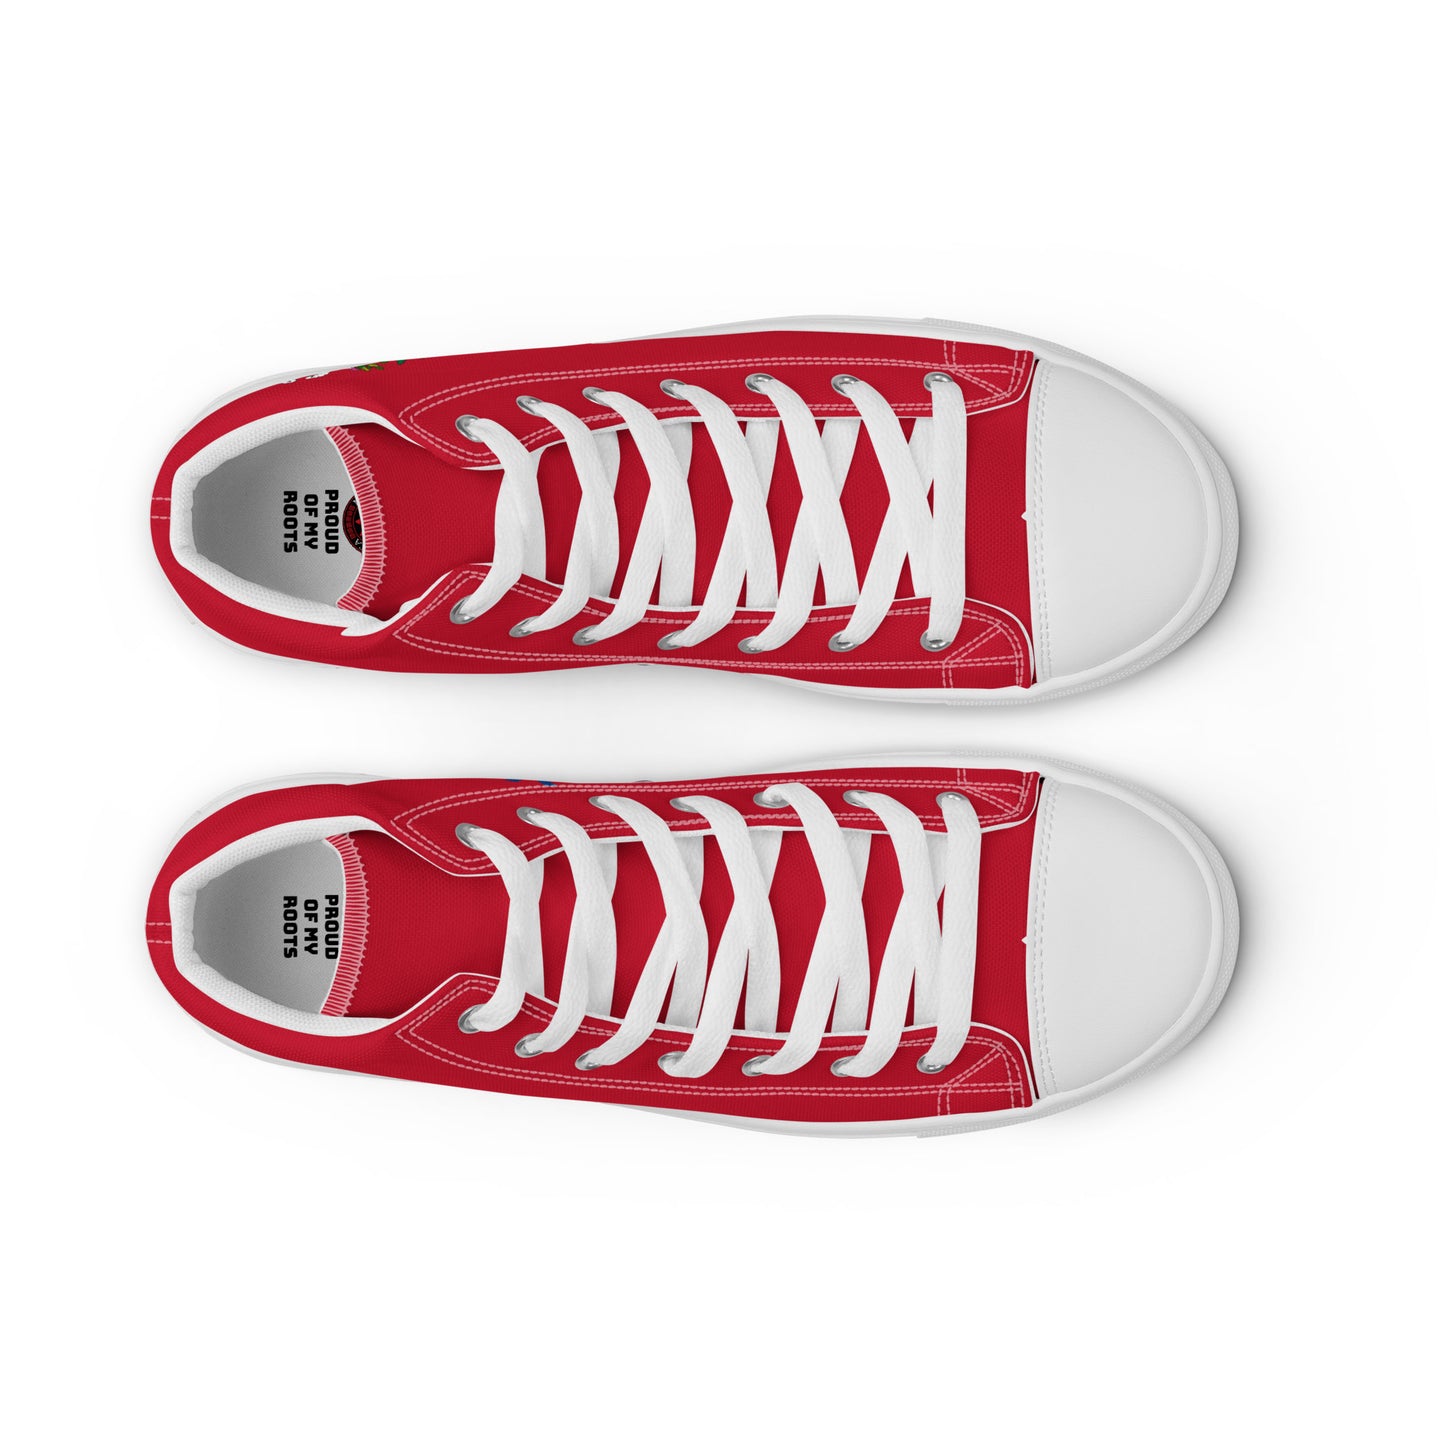 Venezuela - Men - Red - High top shoes